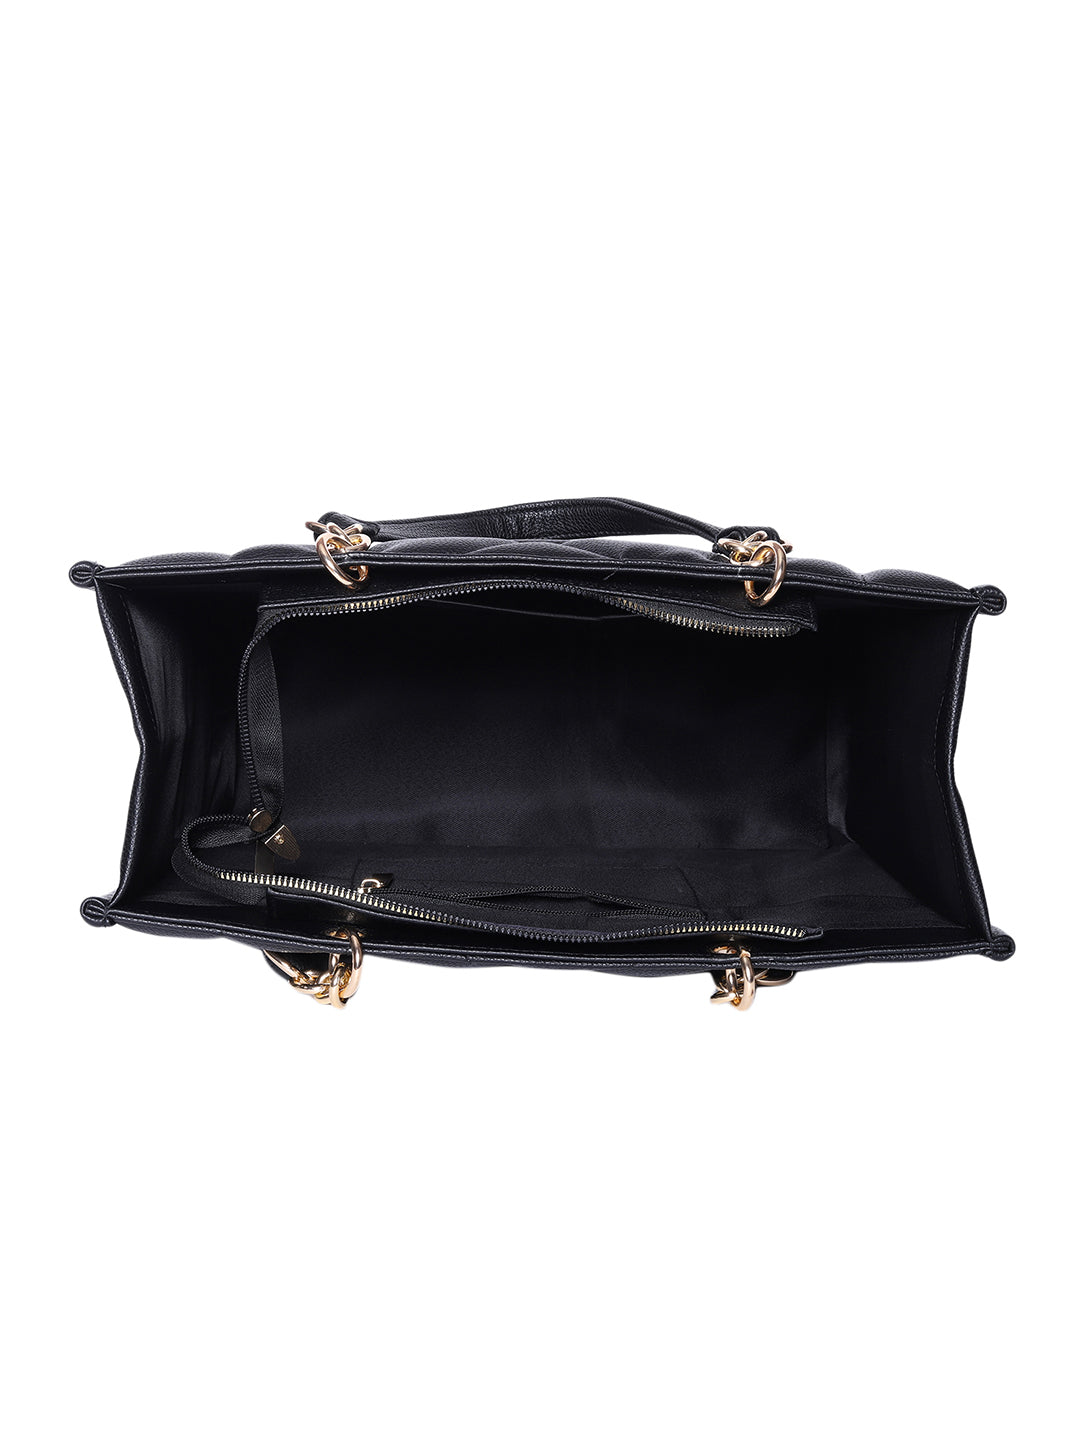 DENVER BAGS MINI WESST Black Textured Tote Bag(MWTB105BL)